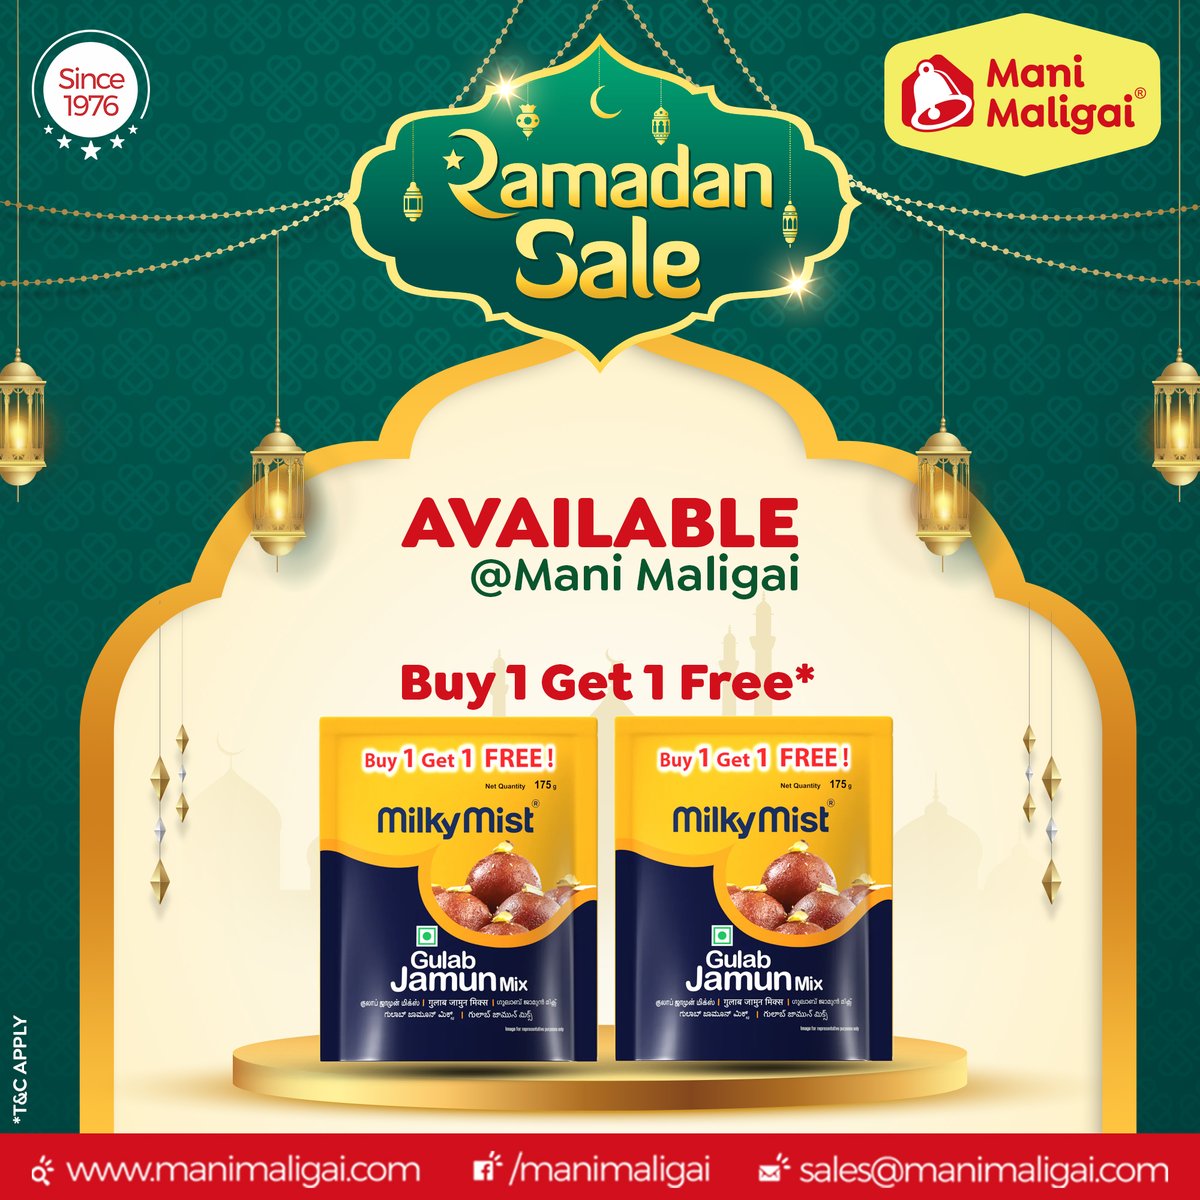 Celebrate Ramadan at Mani Maligai! Buy one pack of MilkyMist Gulab Jamun Mix and get one free. 📞99924 99924 linkto.contact/MM-WA manimaligai.com #Manimaligai #Pollachi #Groceryshop #Supermarket #RamalanSpecialSale #MilkyMistProducts #MilkyMistGulabJamunMix